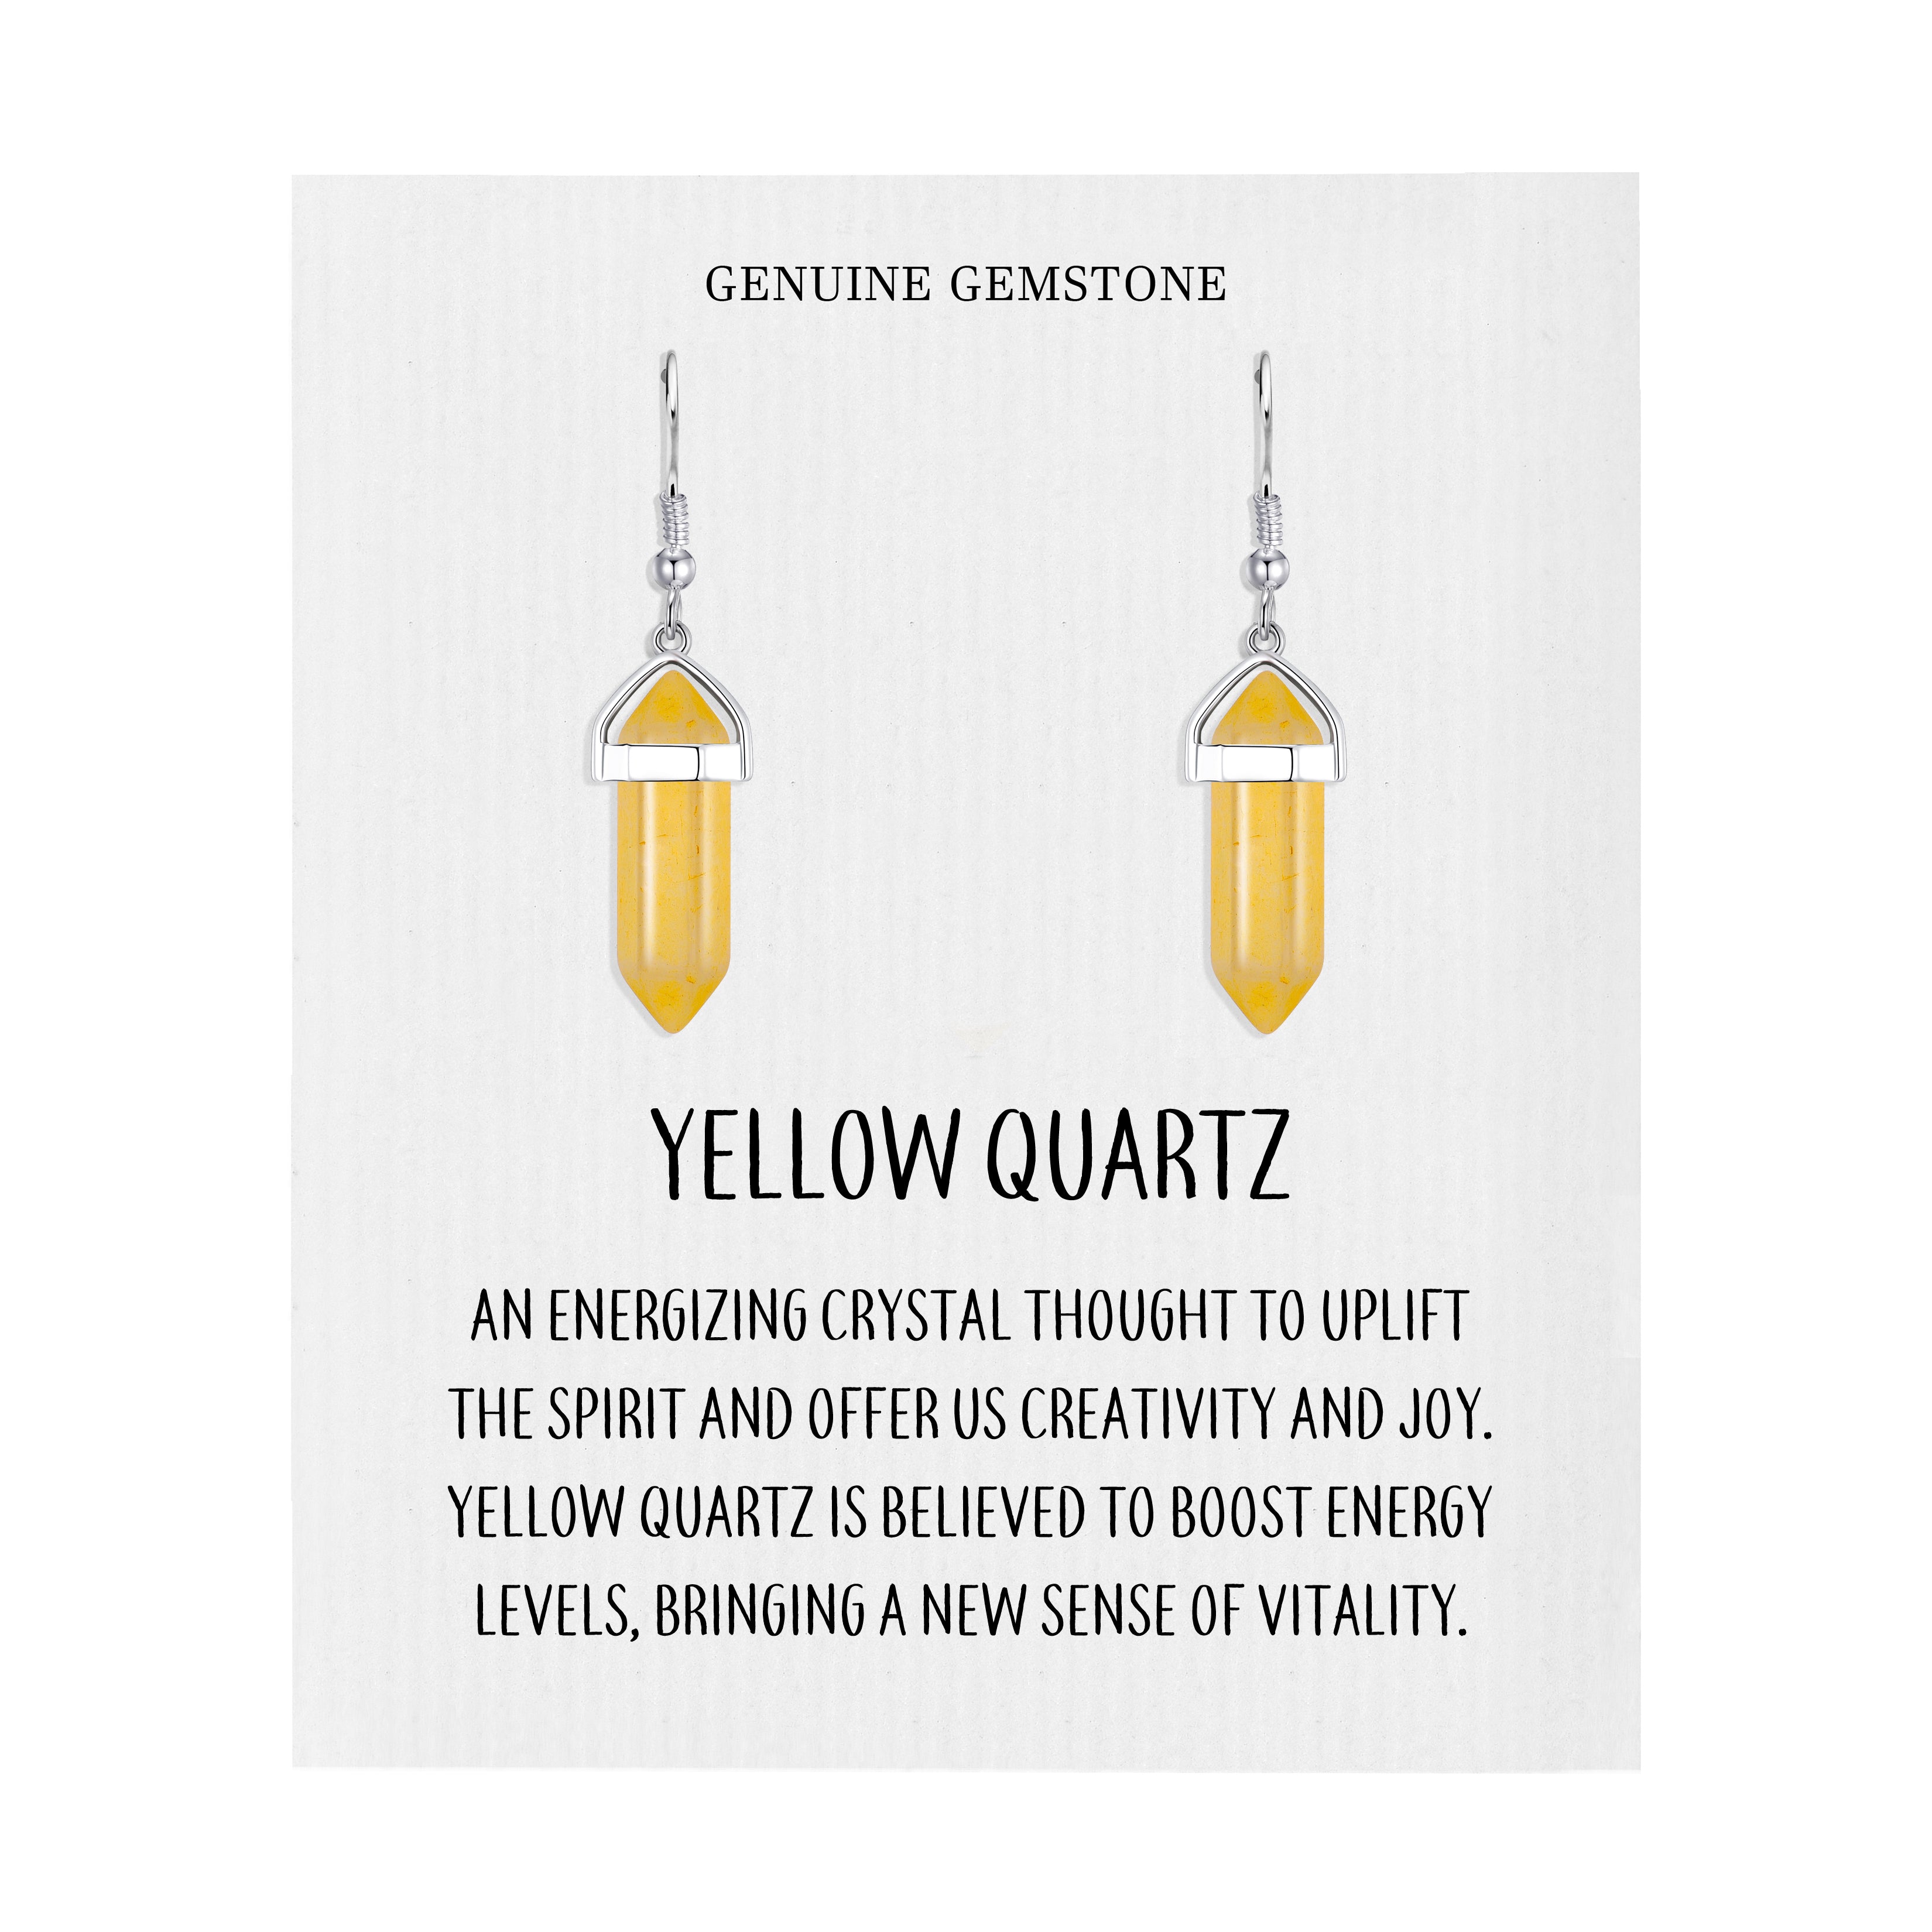 Yellow Quartz Gemstone Drop Earrings with Quote Card by Philip Jones Jewellery